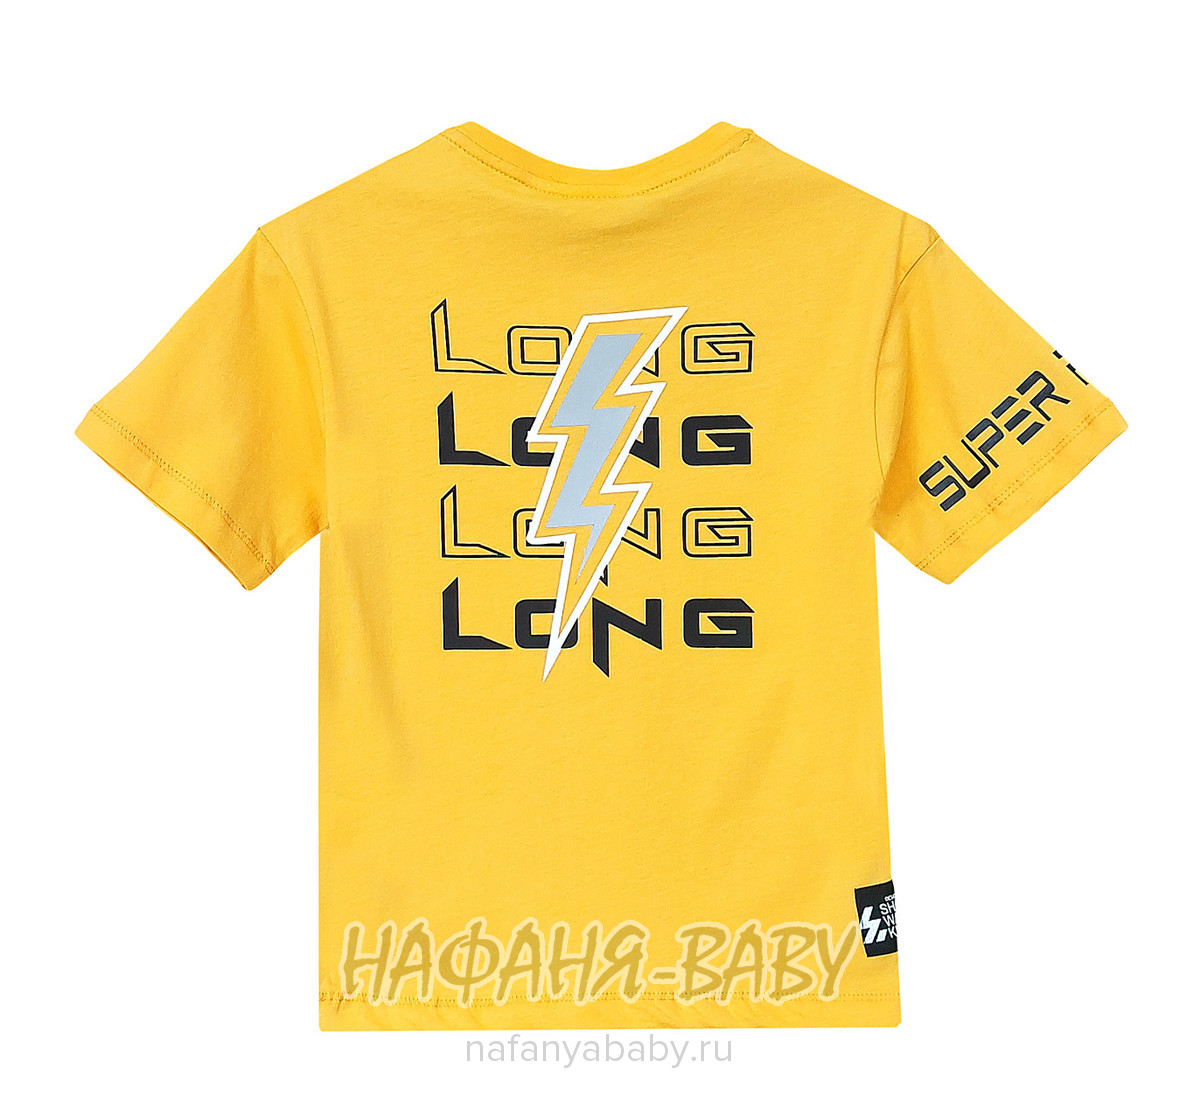 Детская футболка BENETI арт: 2818, 5-9 лет, цвет желтый, оптом Турция